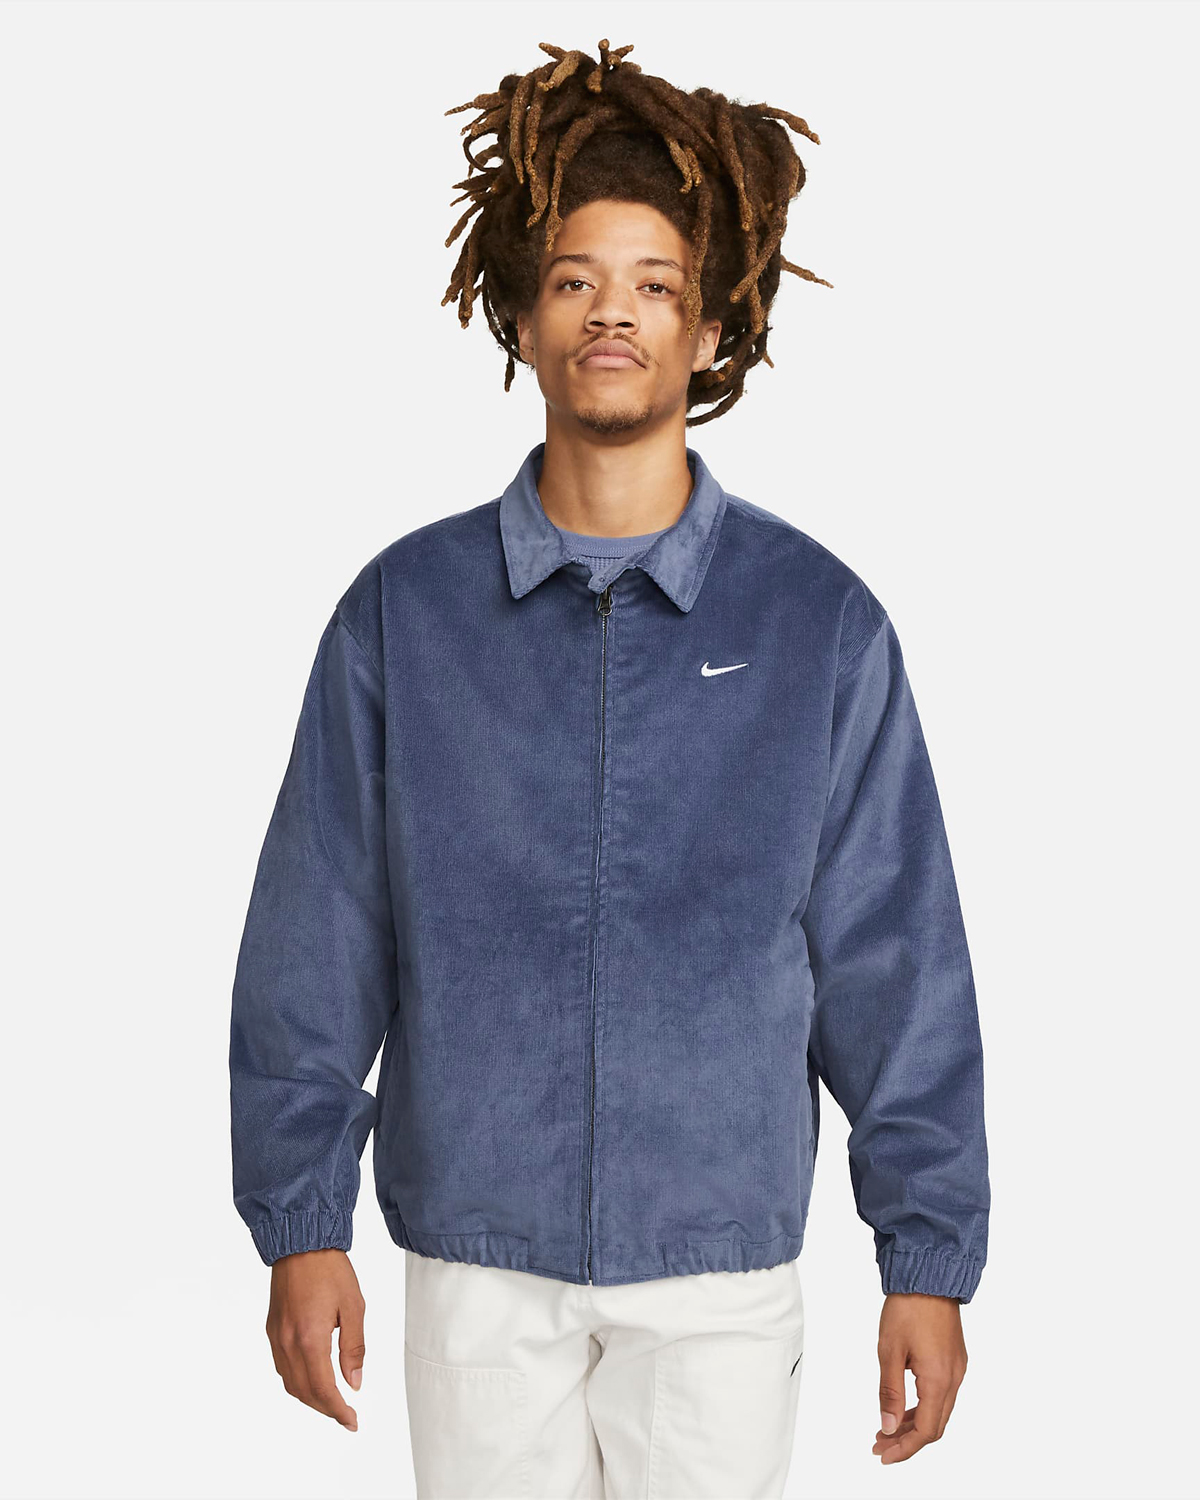 Nike-Life-Harrington-Jacket-Diffused-Blue